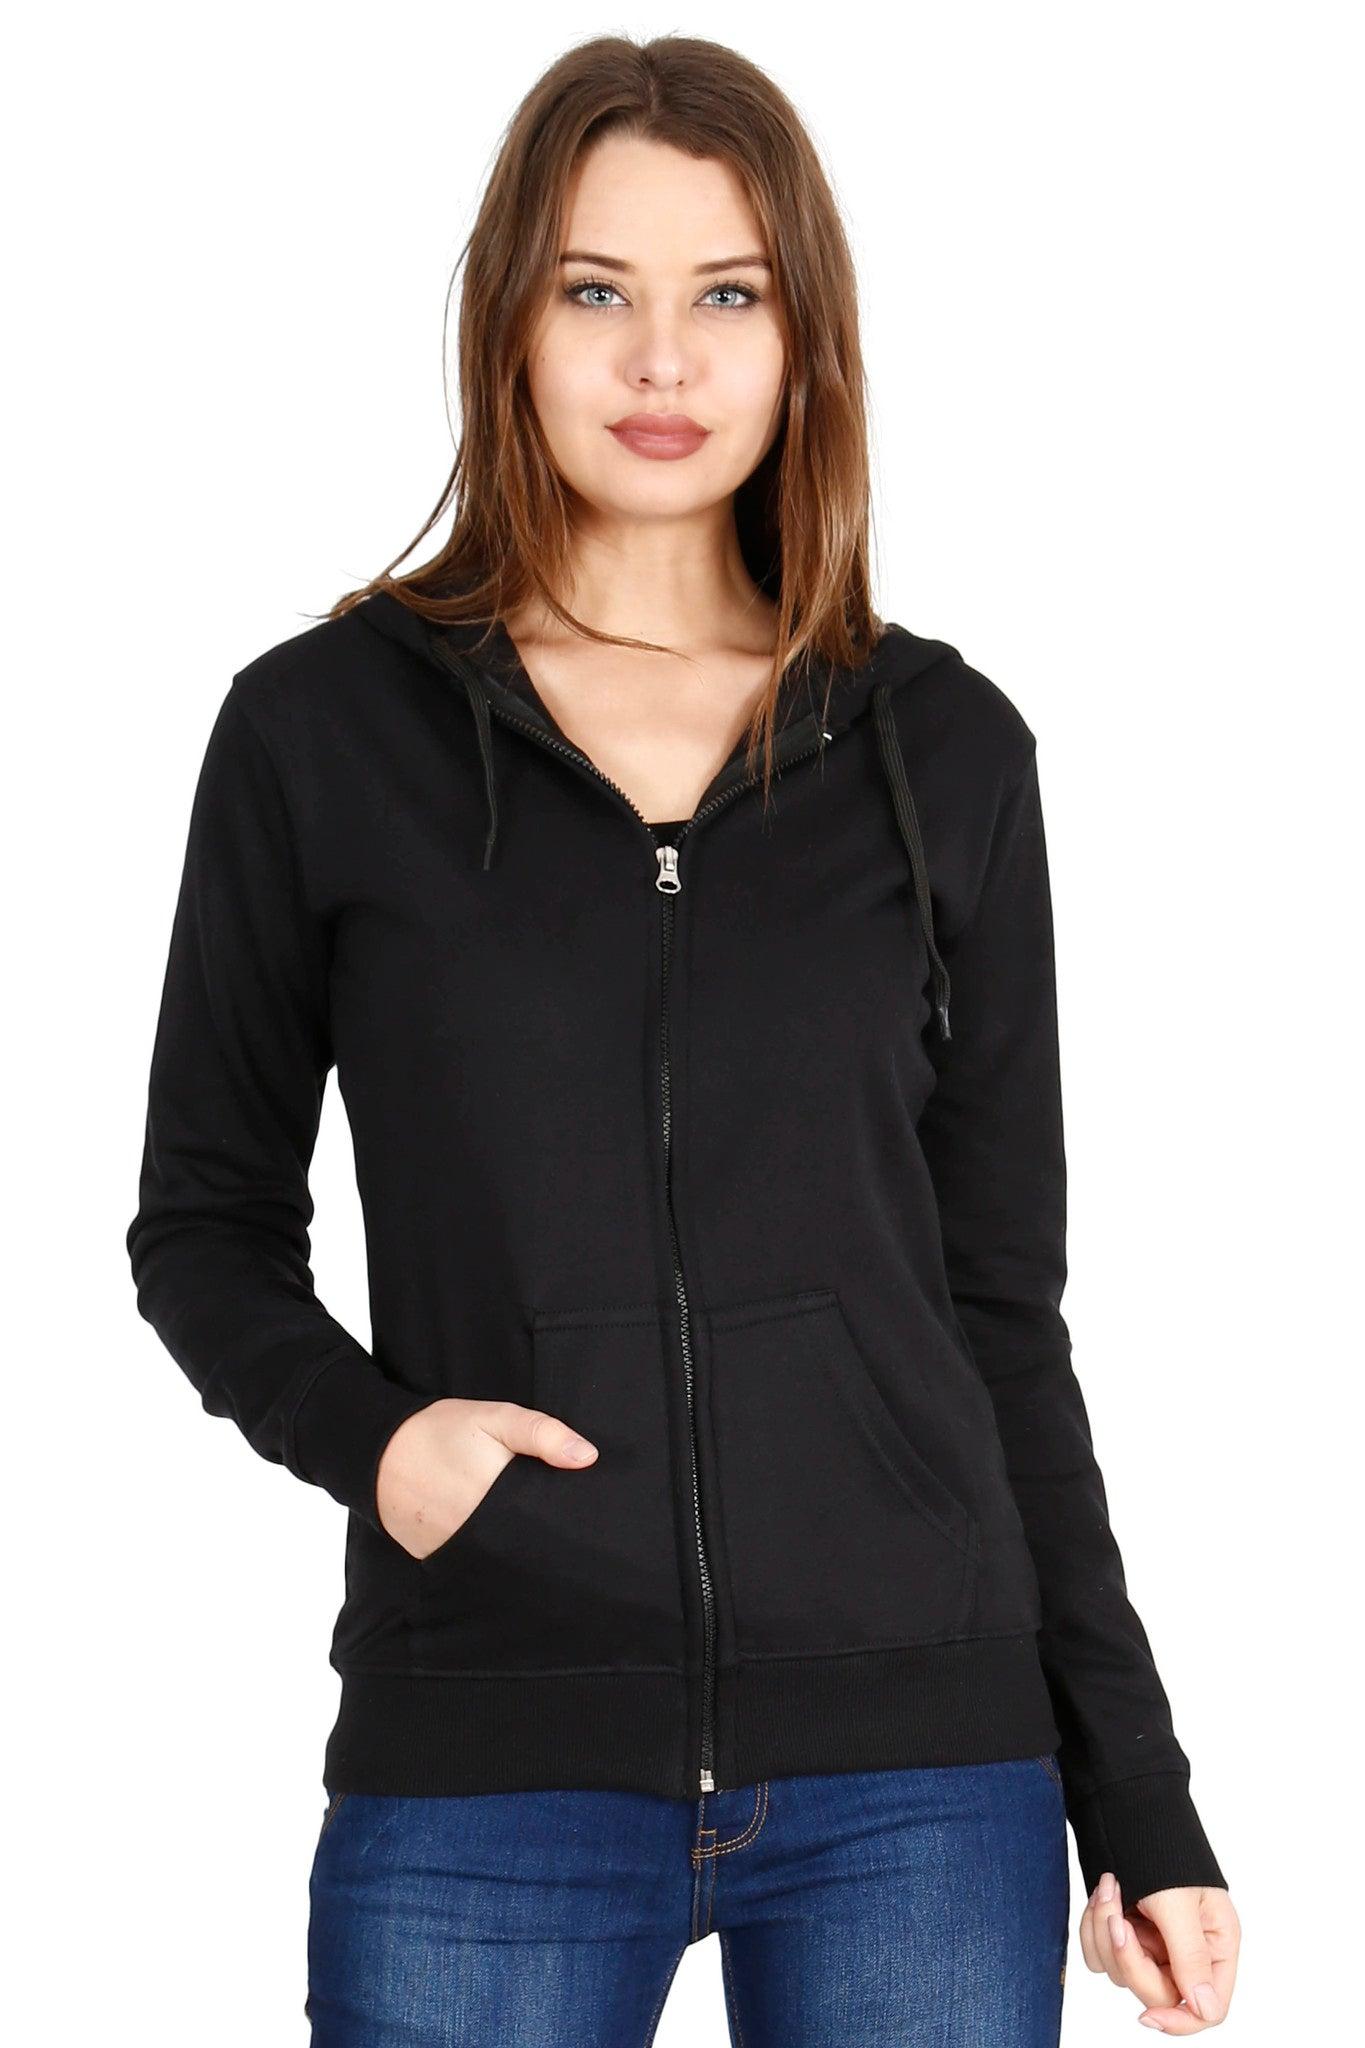 women's-cotton-plain-full-sleeve-black-color-hoodies/sweatshirt